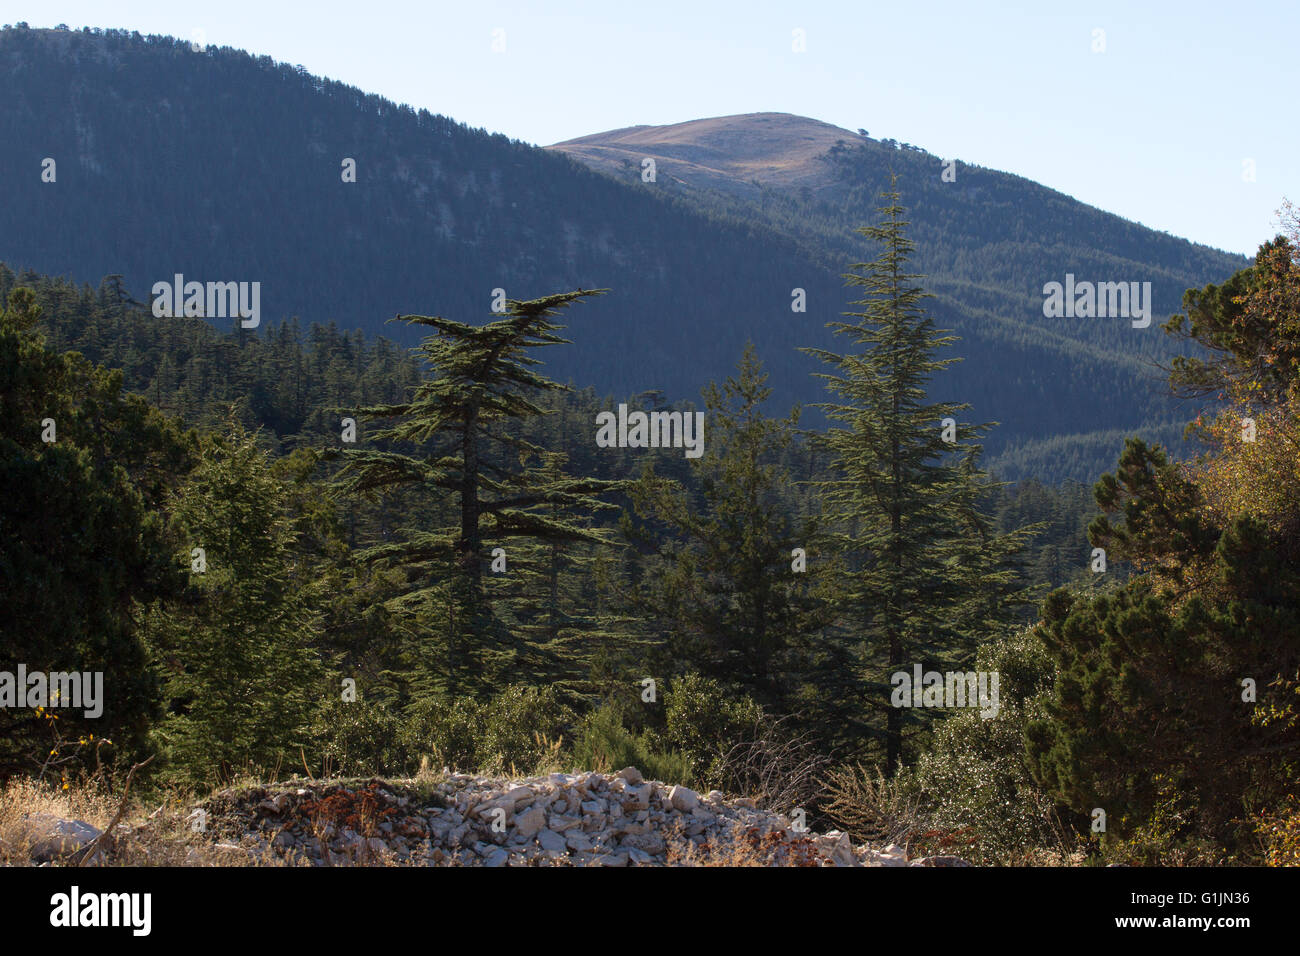 Lebanese cedar tree in the forest peak mountains Stock Photo